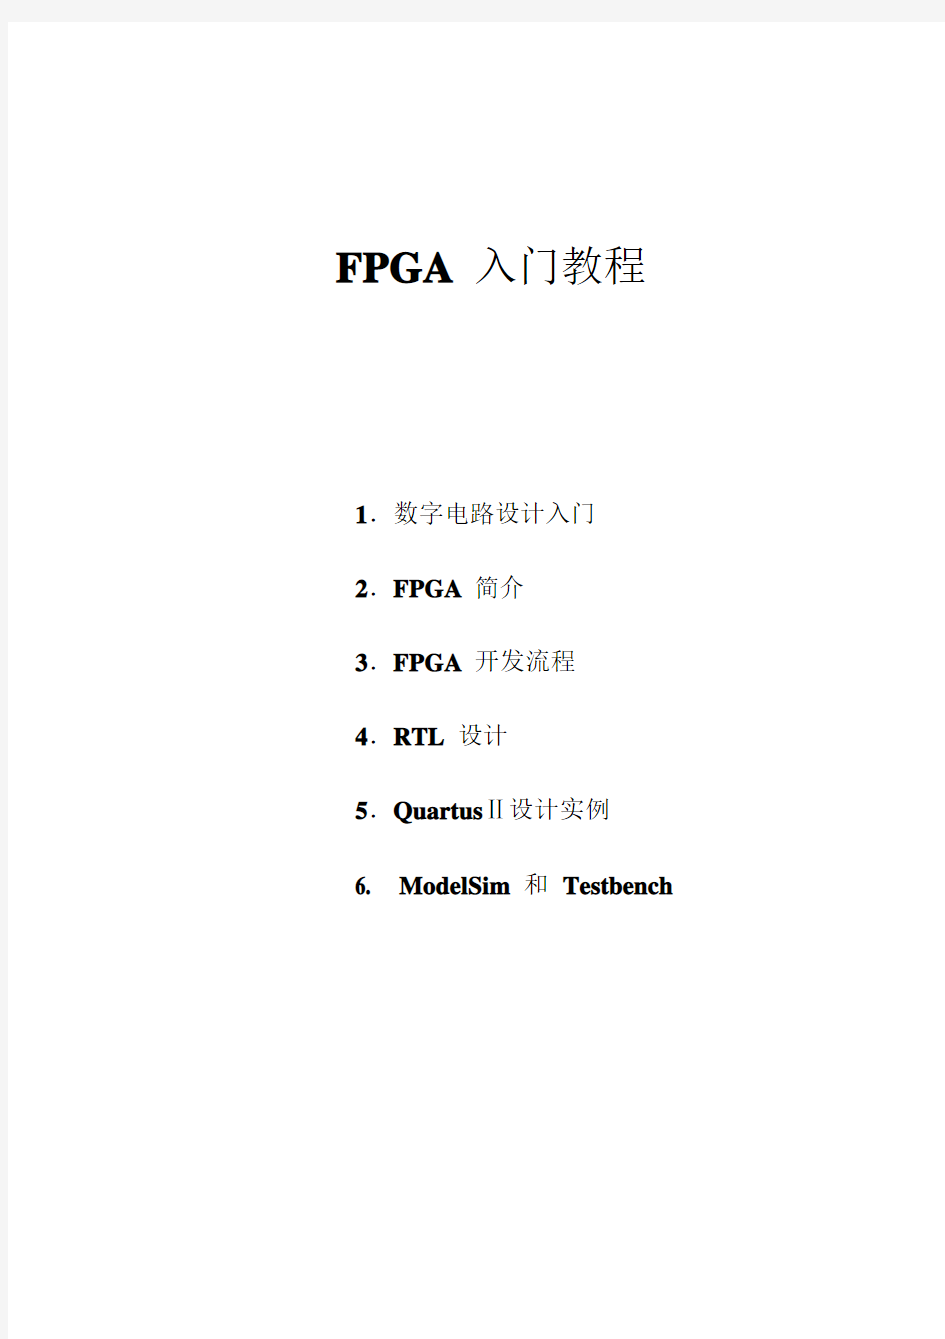 FPGA入门教程